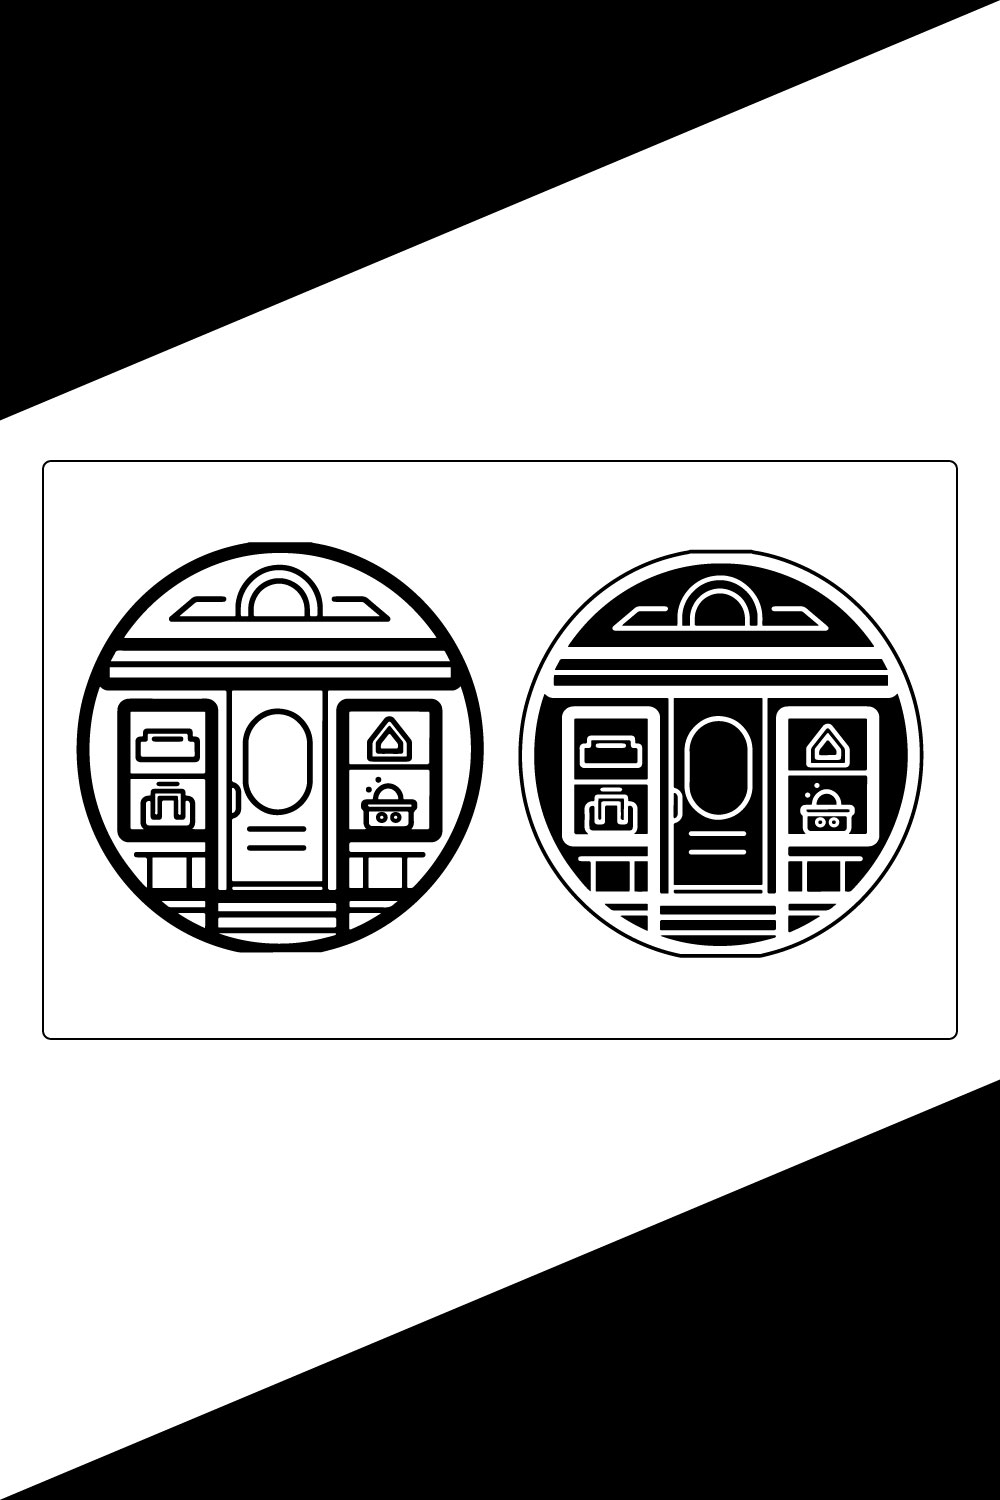 shop building icon set,Online store flat line icon set Vector illustration included symbols pinterest preview image.